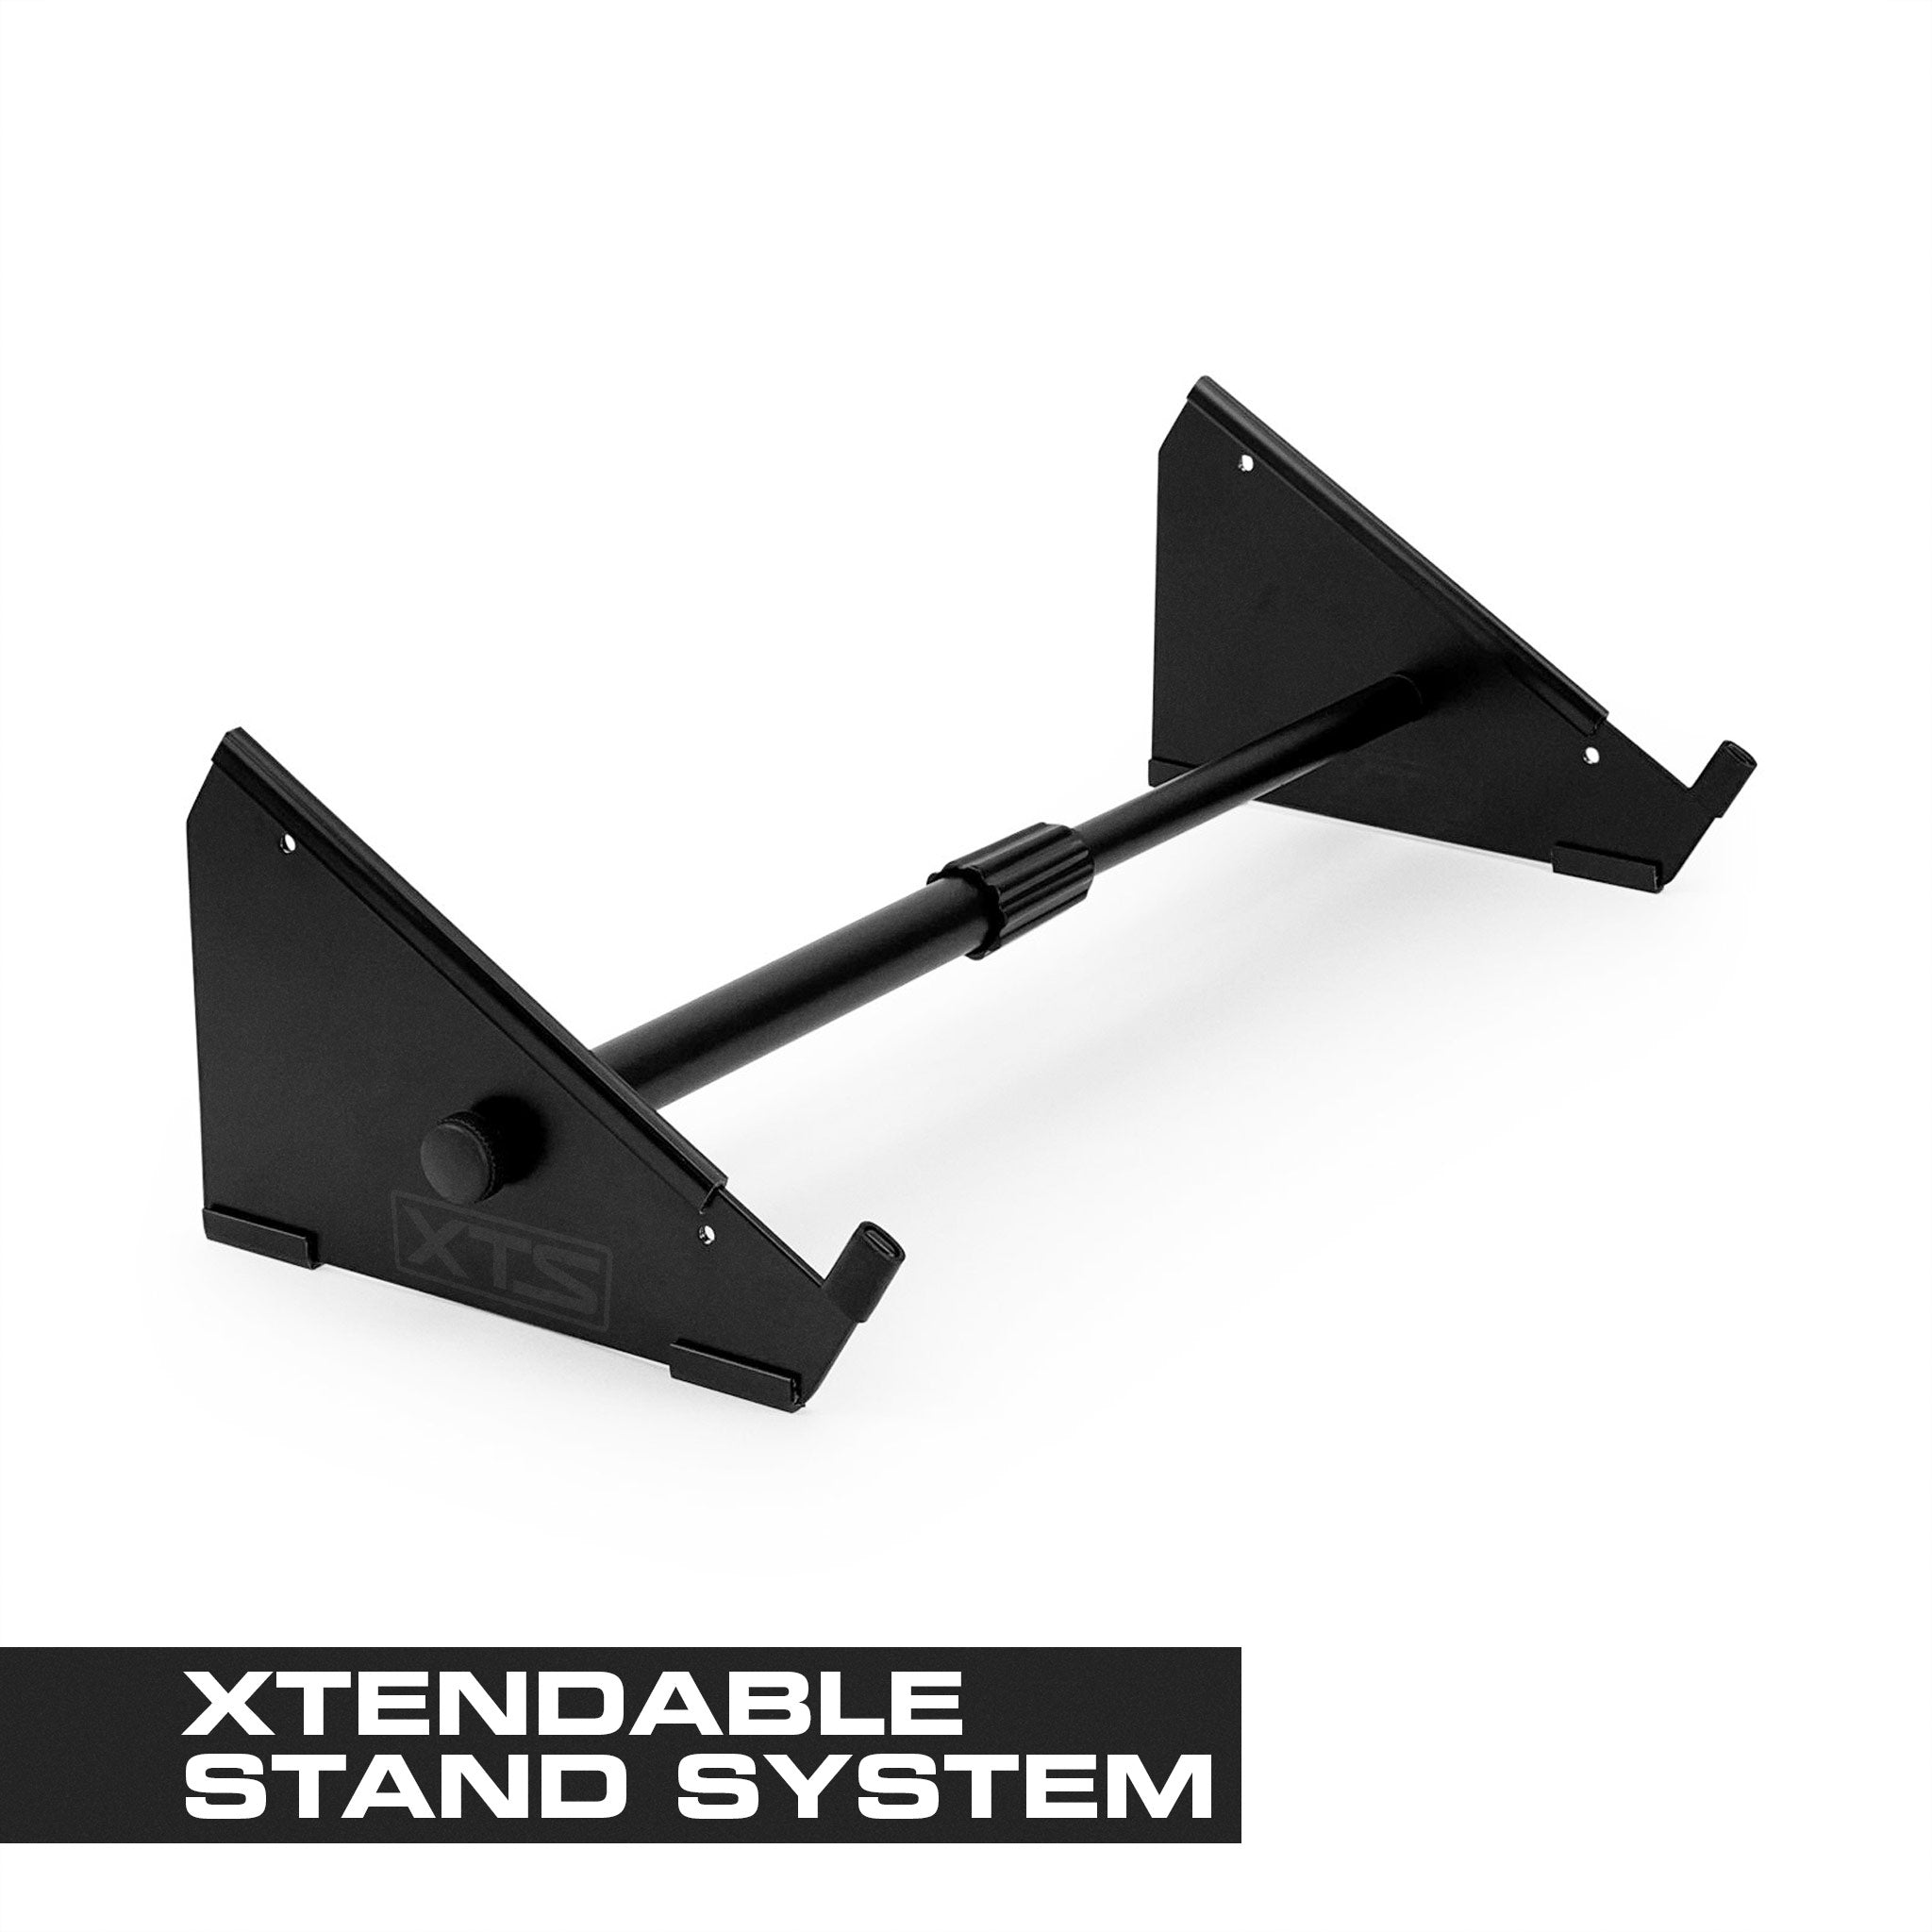 XTS Desktop Stand System